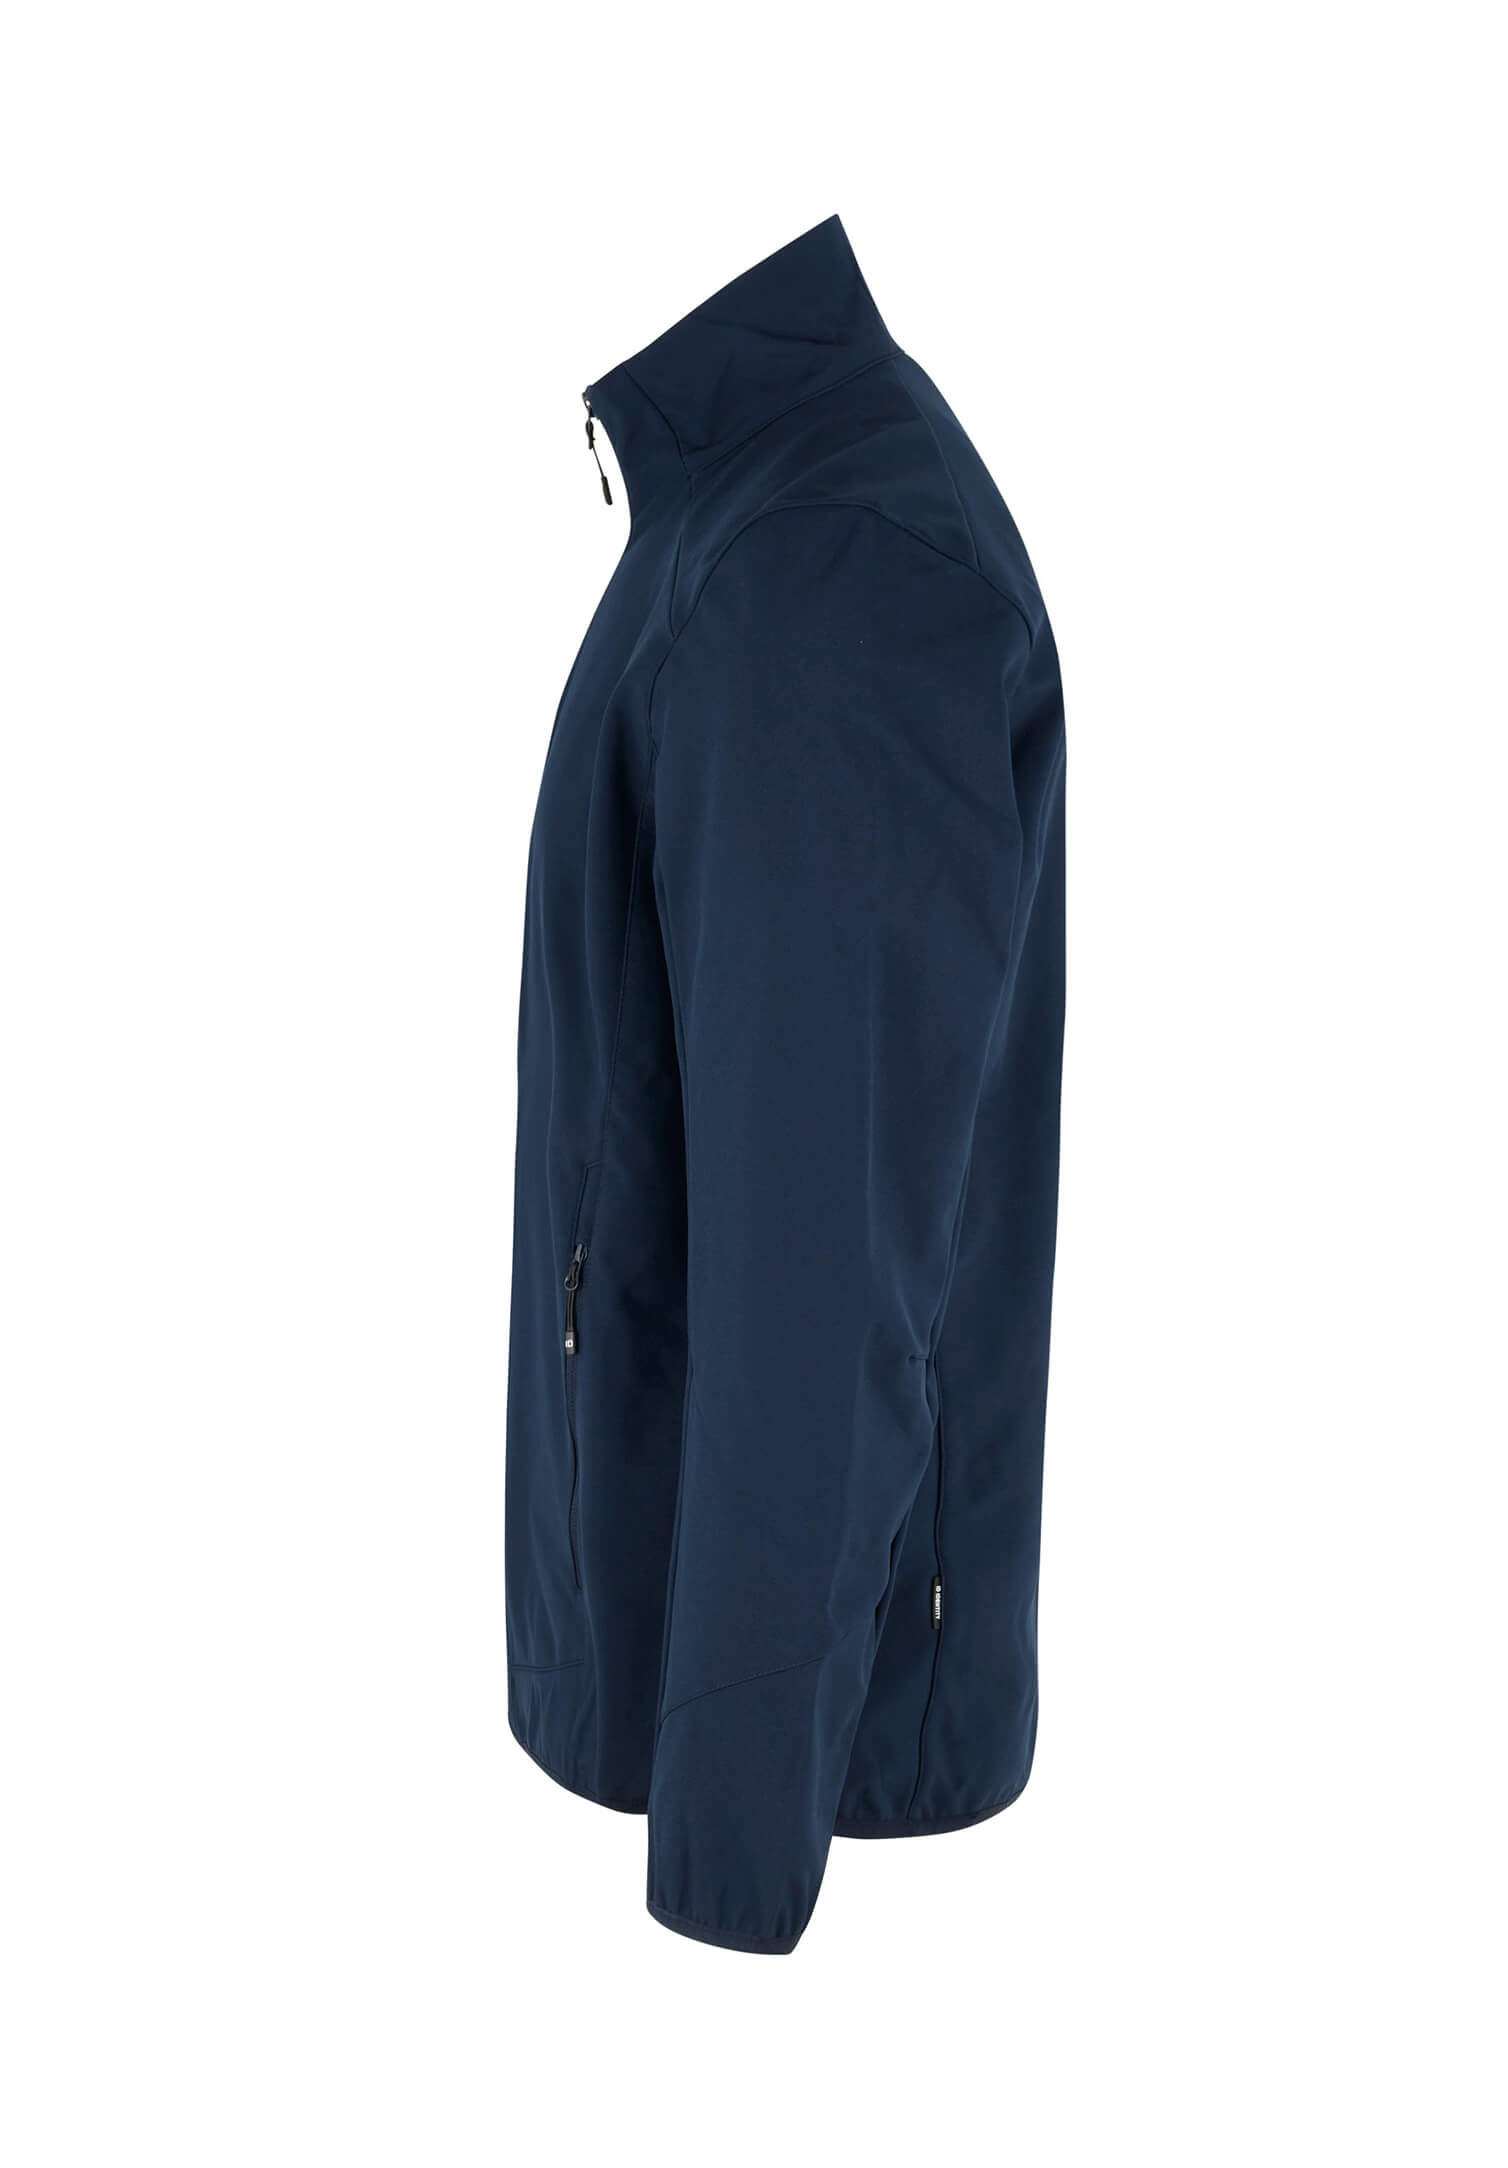 Herren Classic Softshell-Jacke Größe: 3XL Farbe: marine